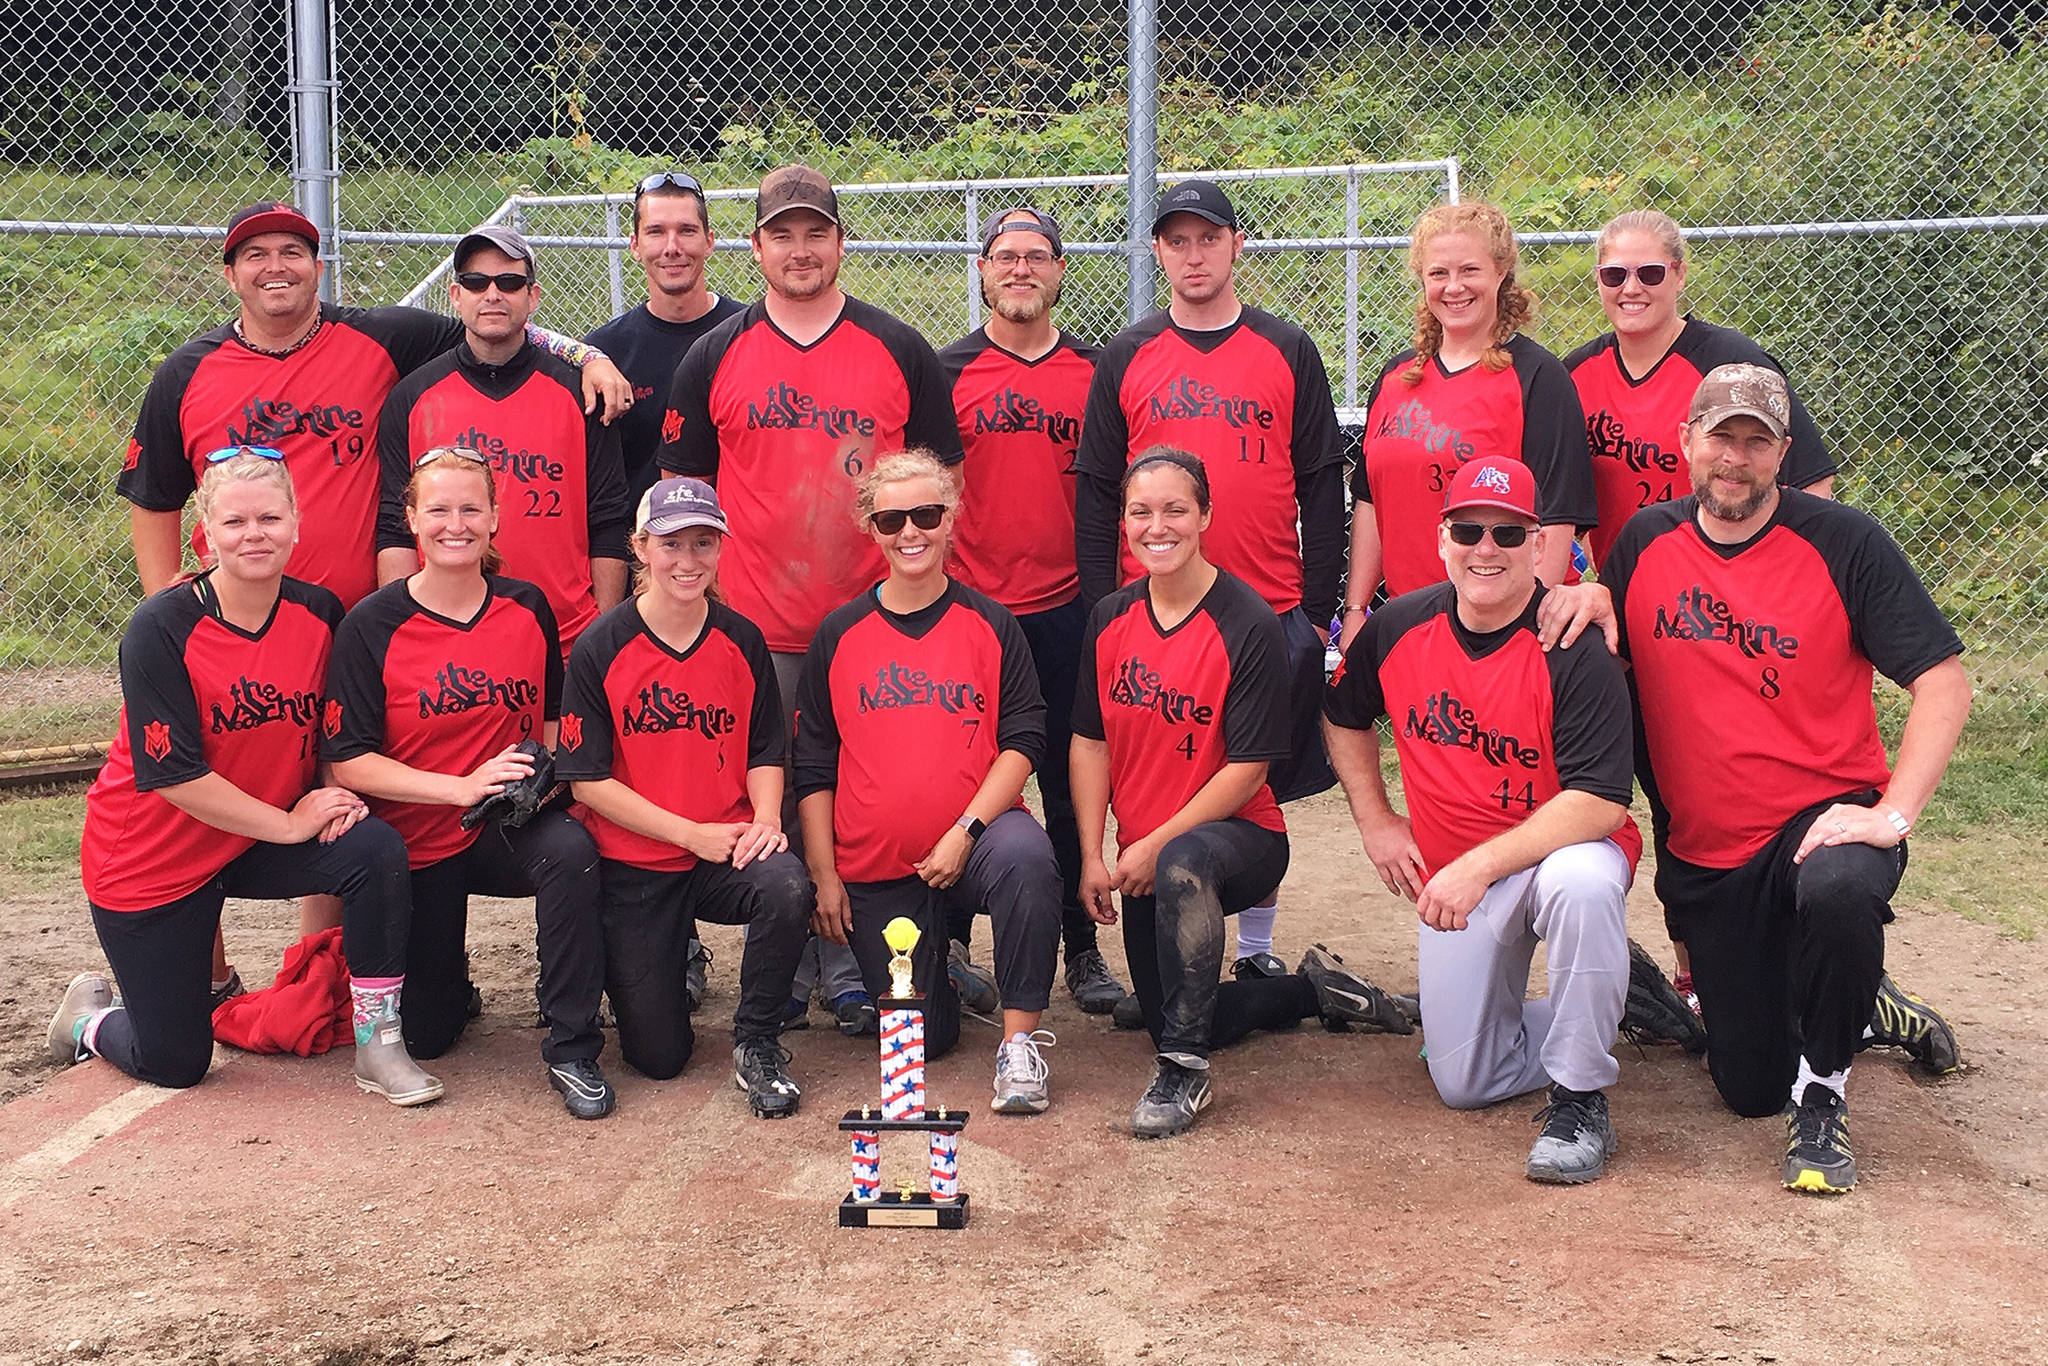 Machine members take title in city softball tournament